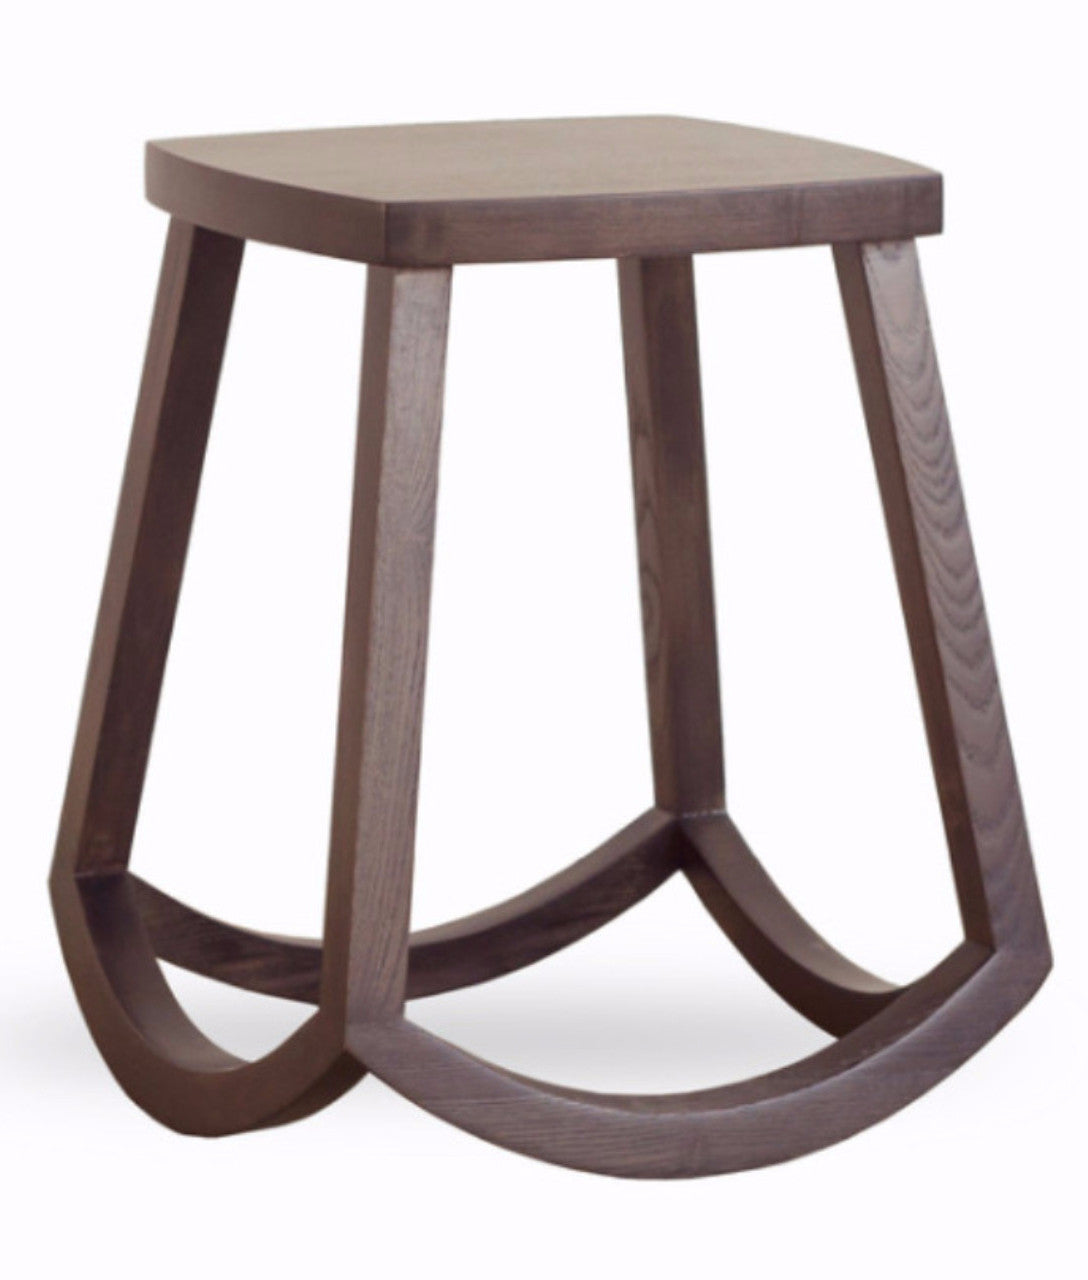 ITRUST STOOL Chair ziinlife Walnut Brown